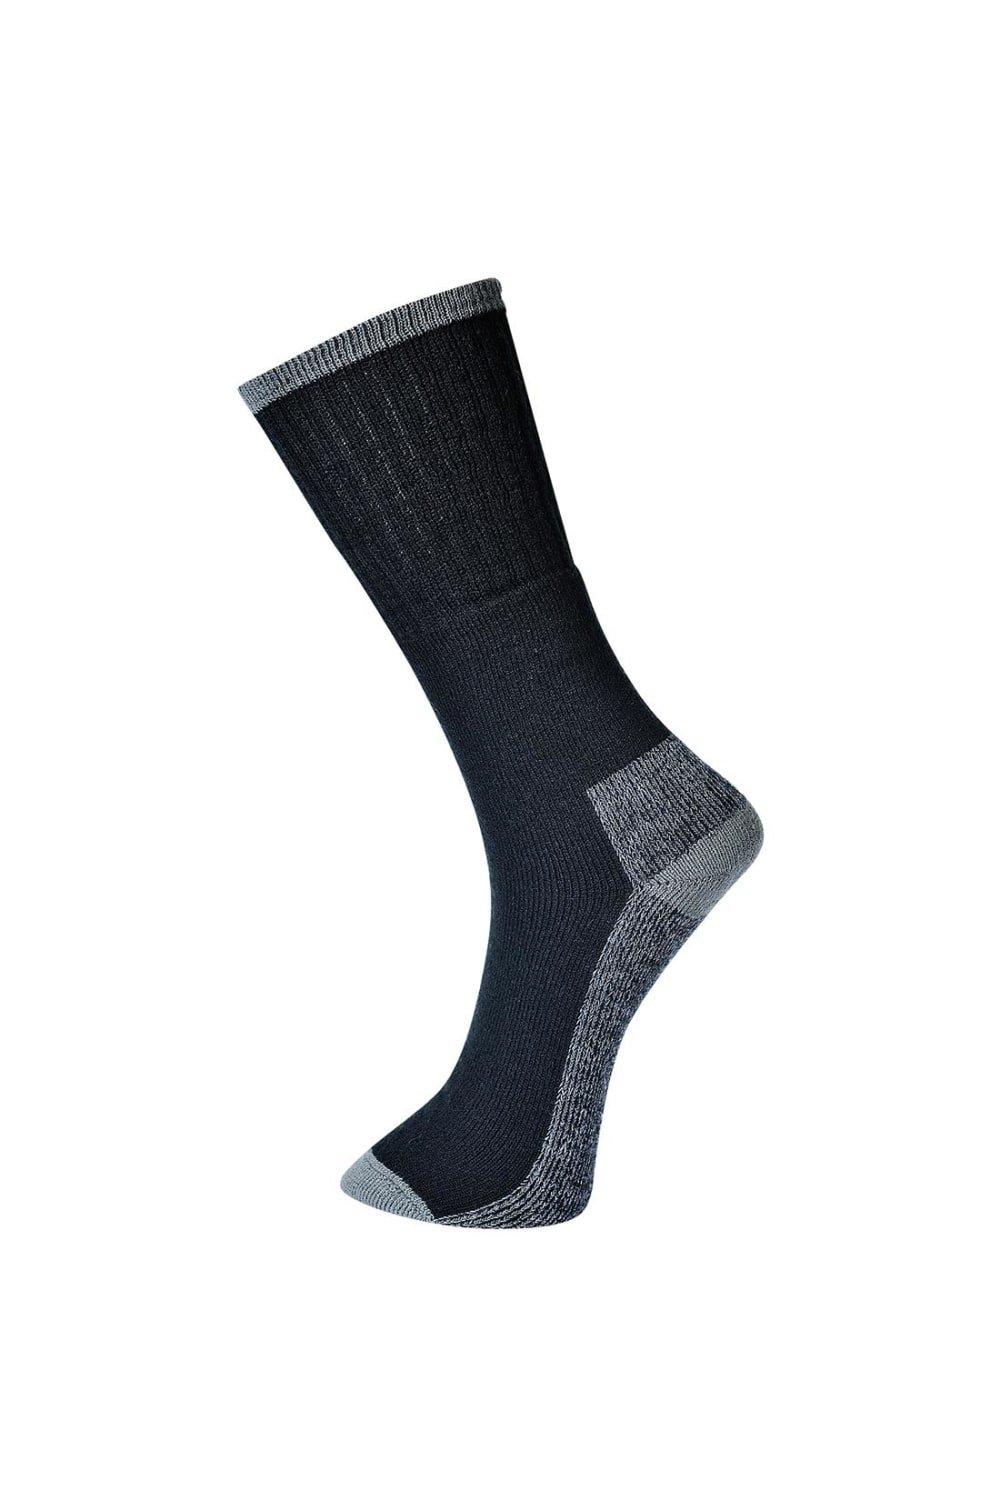 Work Socks (Pack of 3)